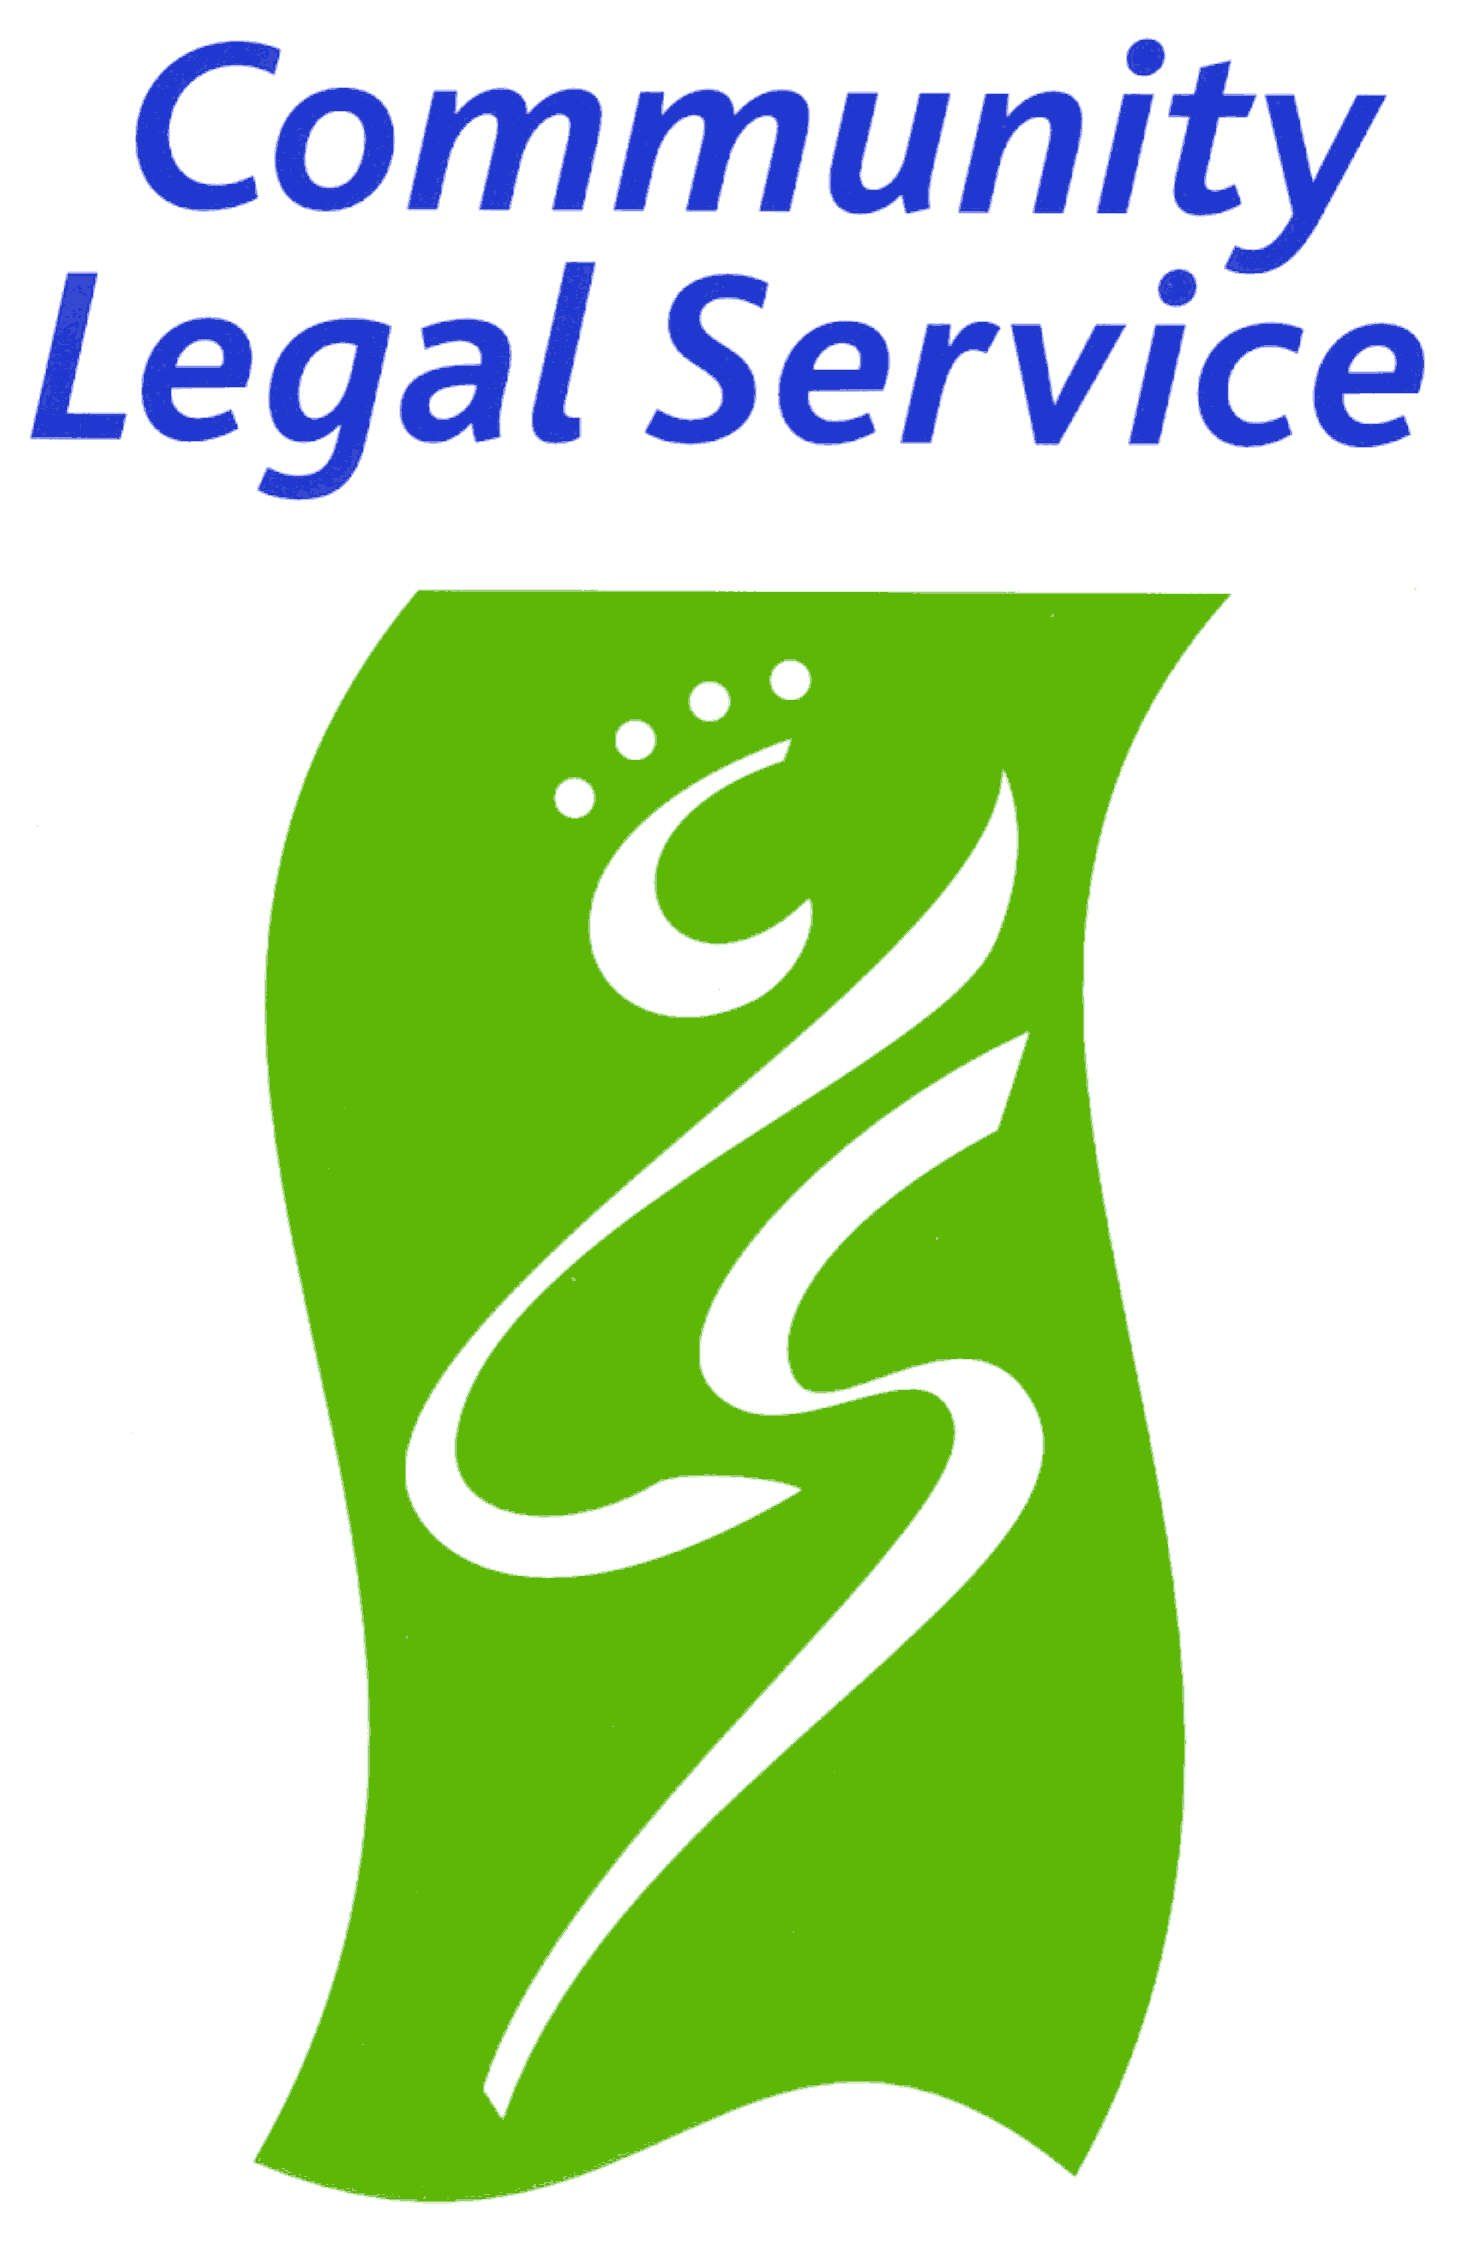 Community legal service icon